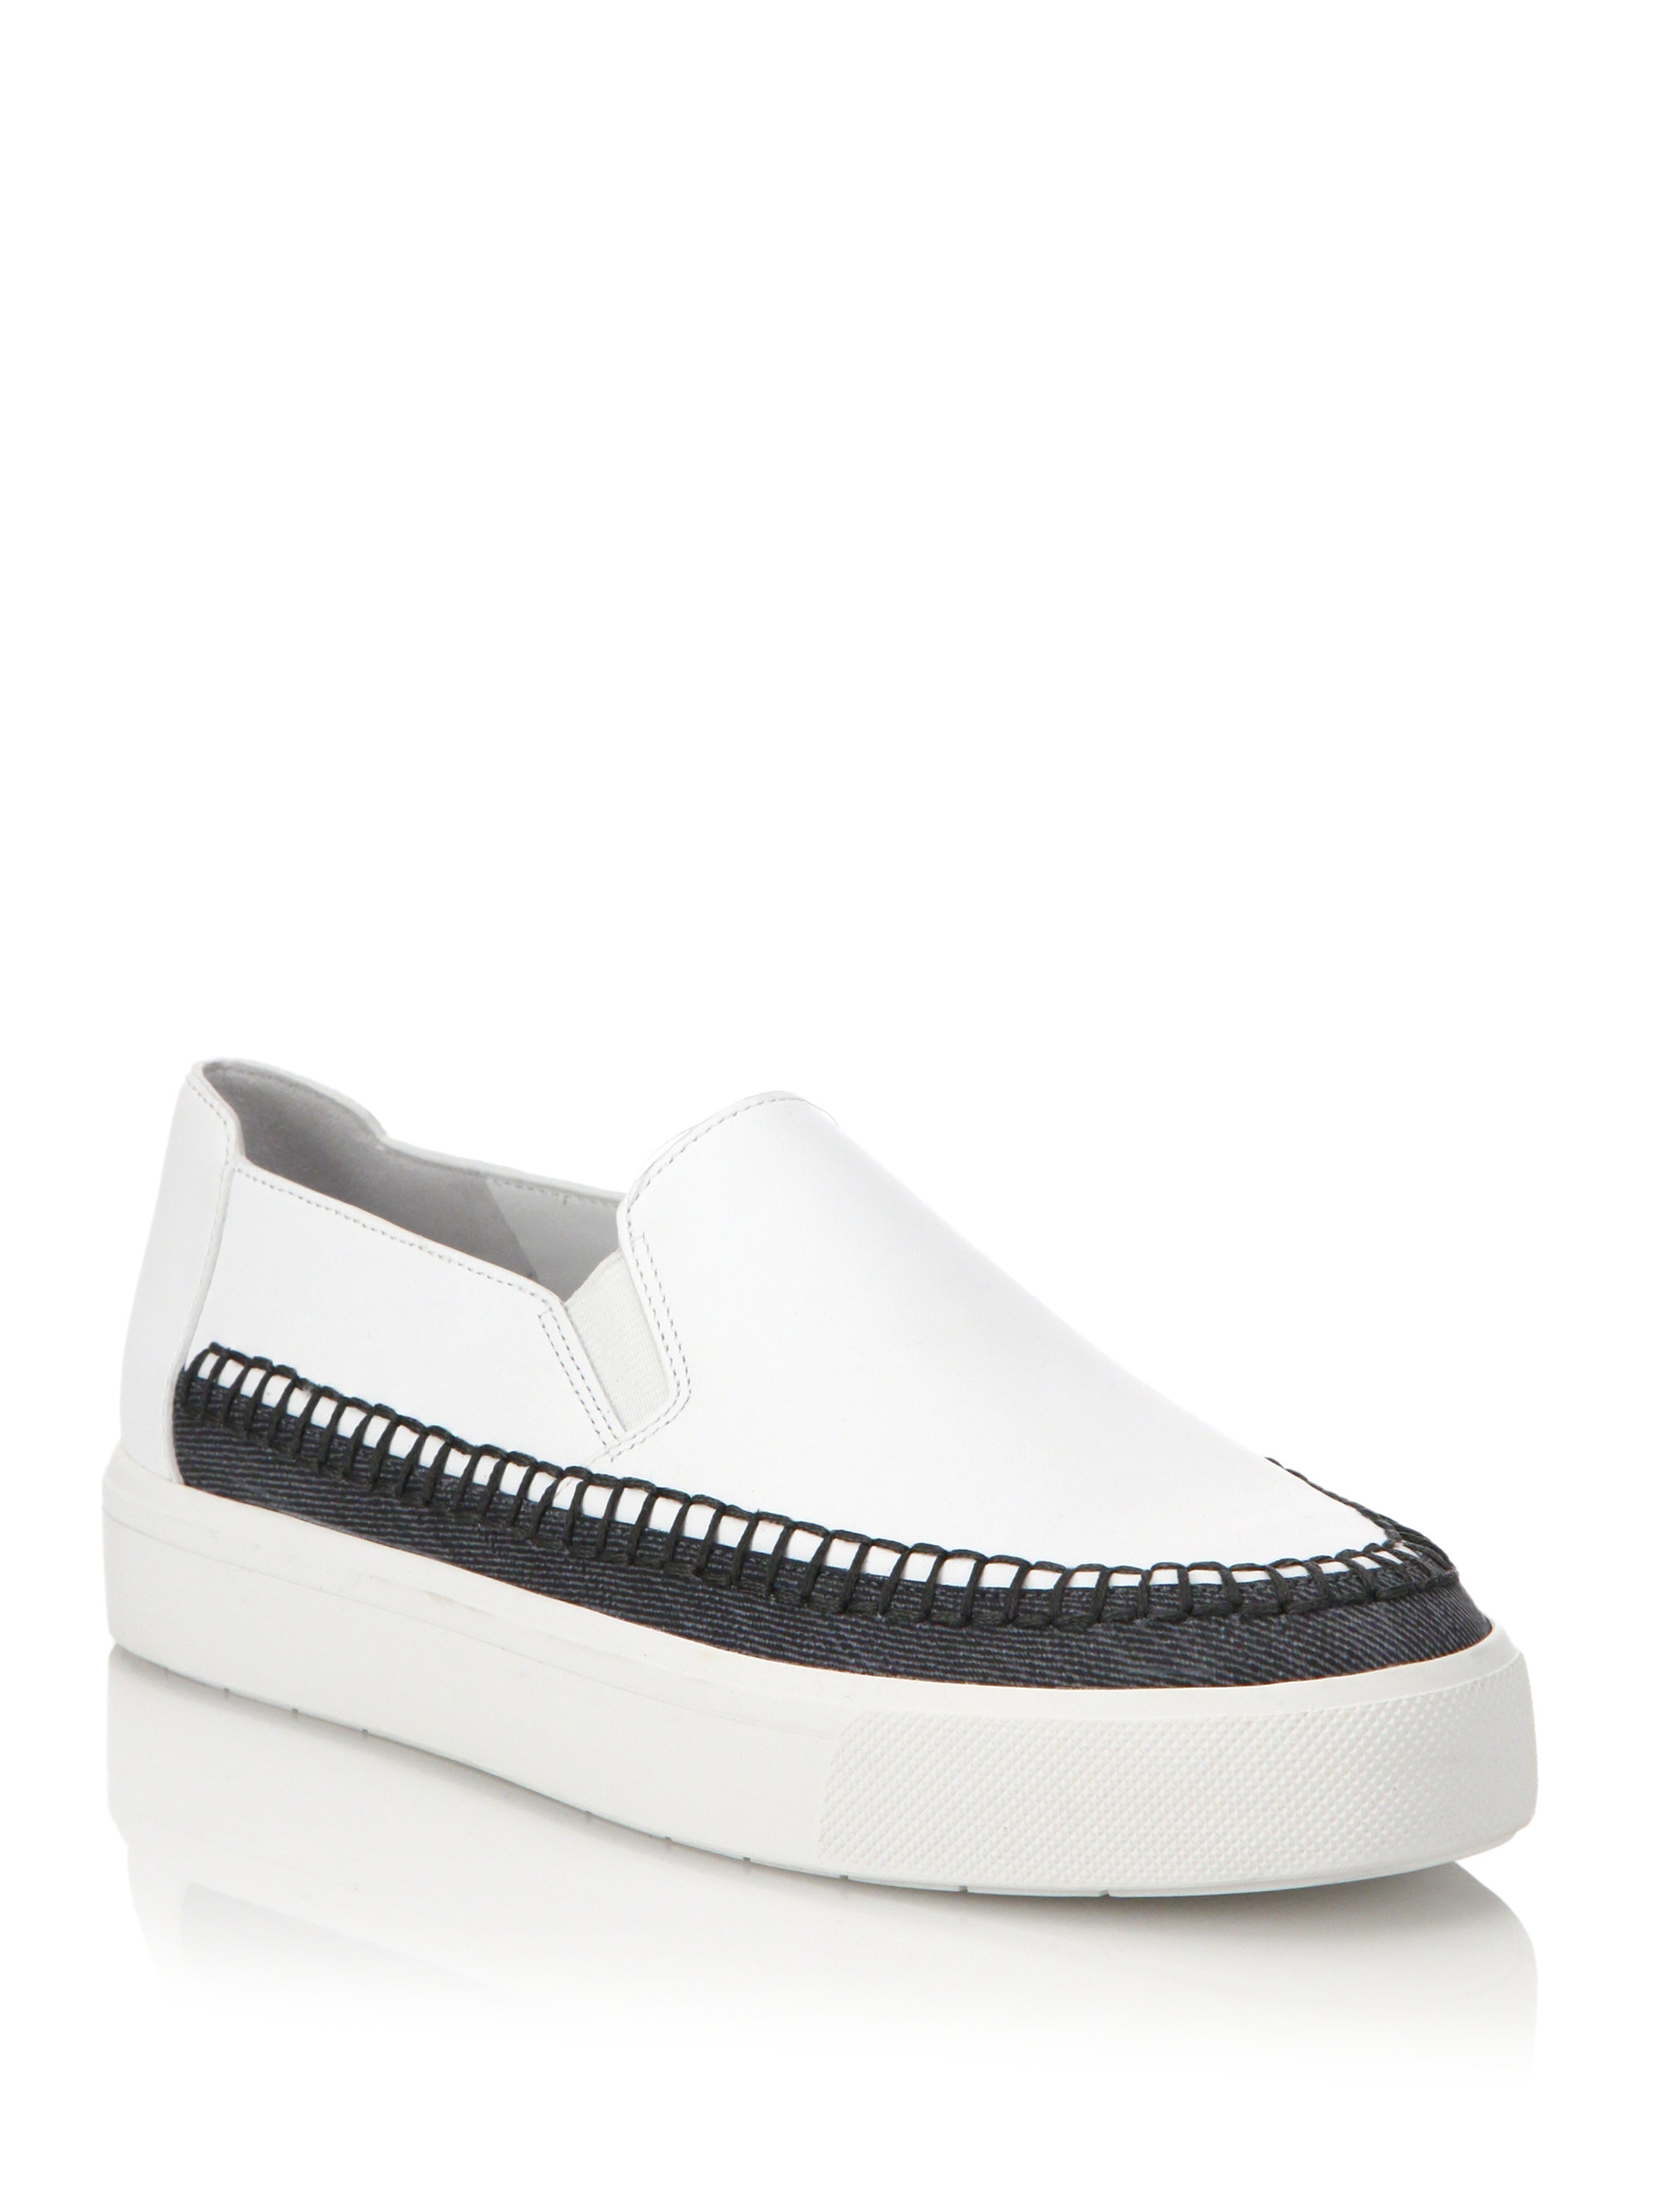 Lyst - Vince Bates Leather & Denim Platform Slip-on Sneakers in White